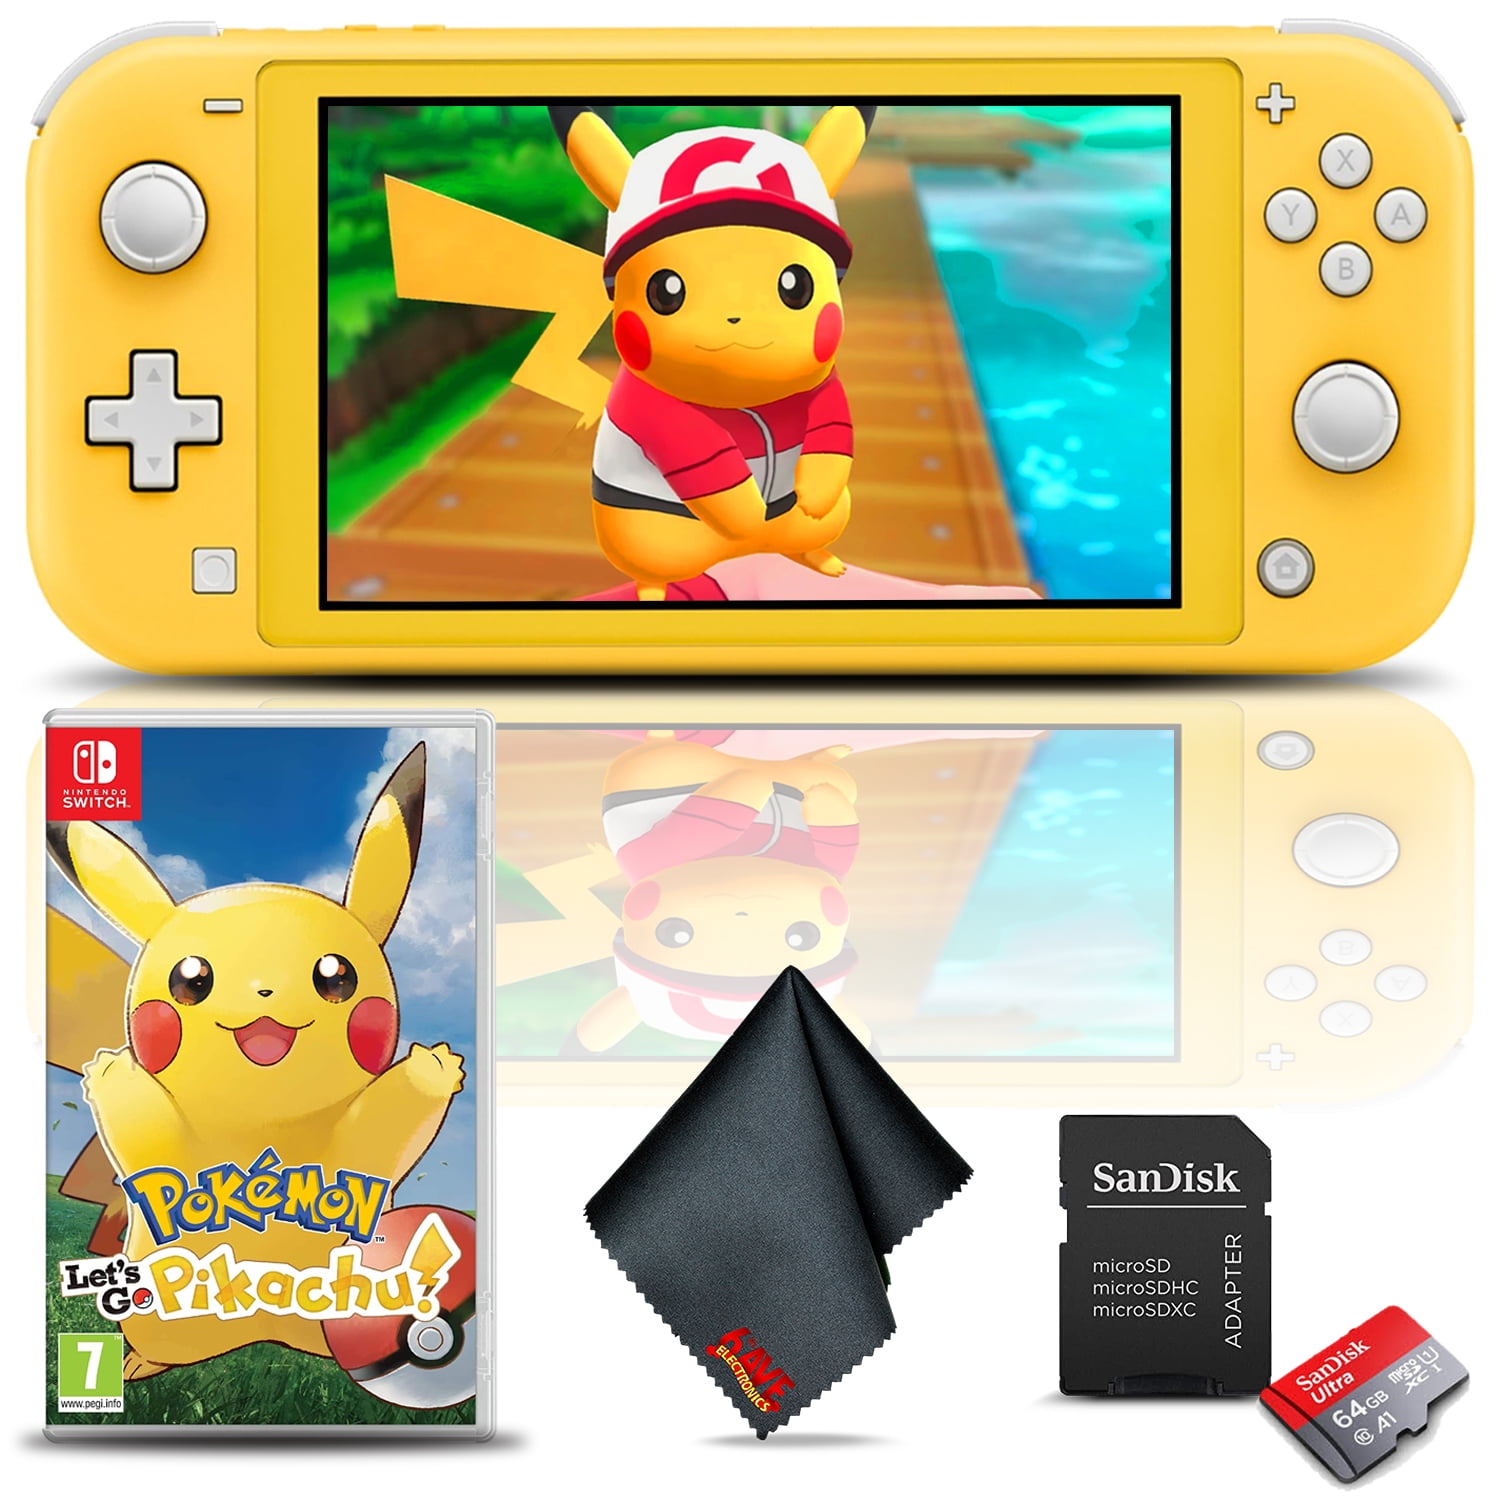 Nintendo Switch Lite (Yellow) with Pokemon: Let's Go and 64GB microSD - Walmart.com